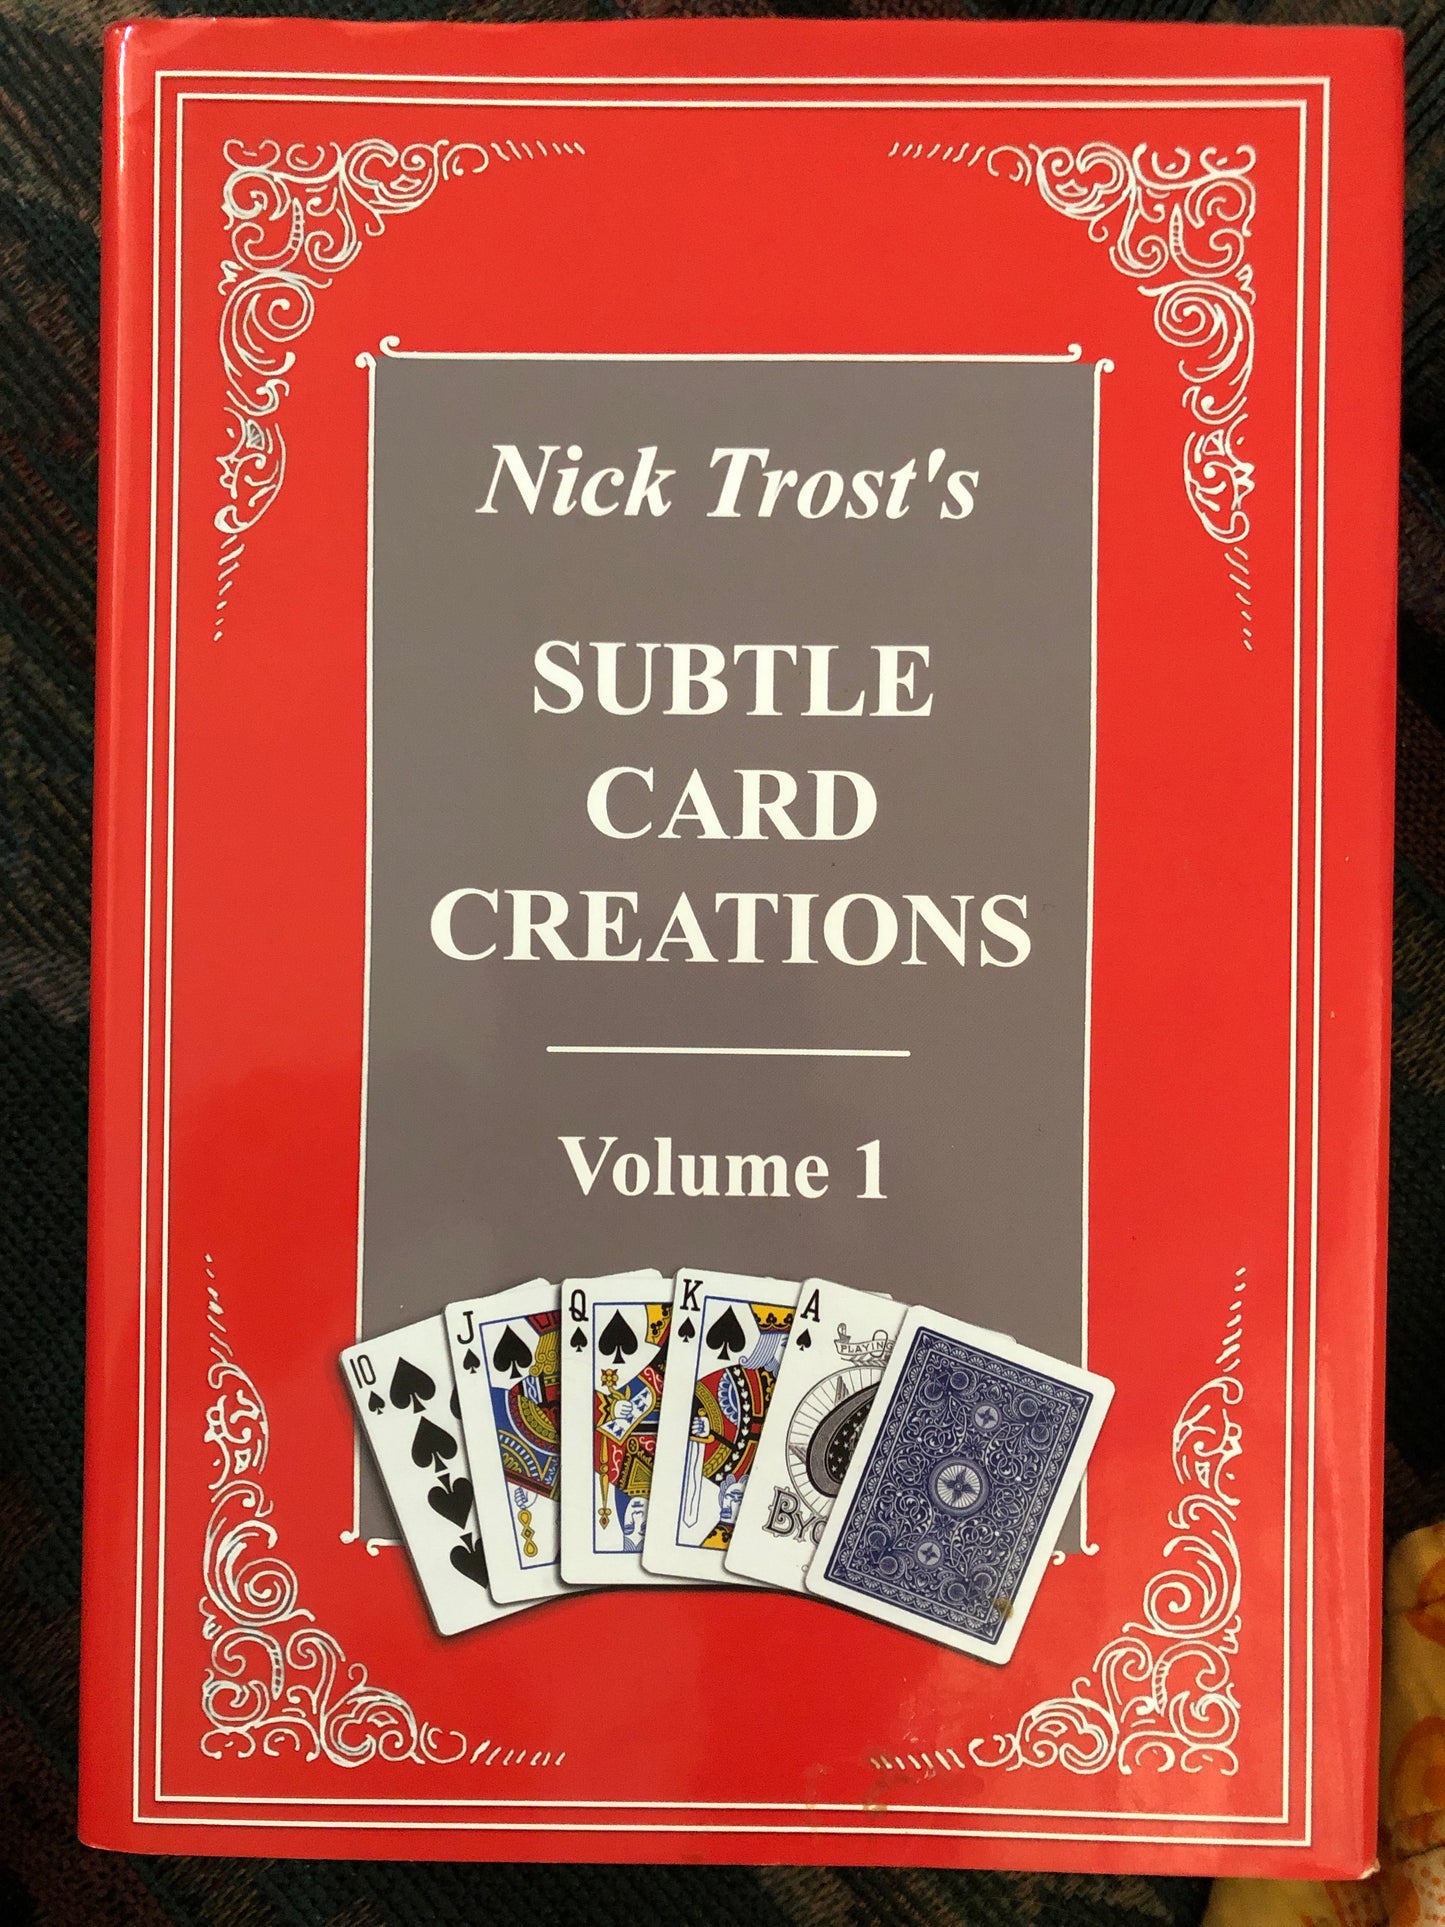 Subtle Card Creations Vol. 1 - Nick Trost